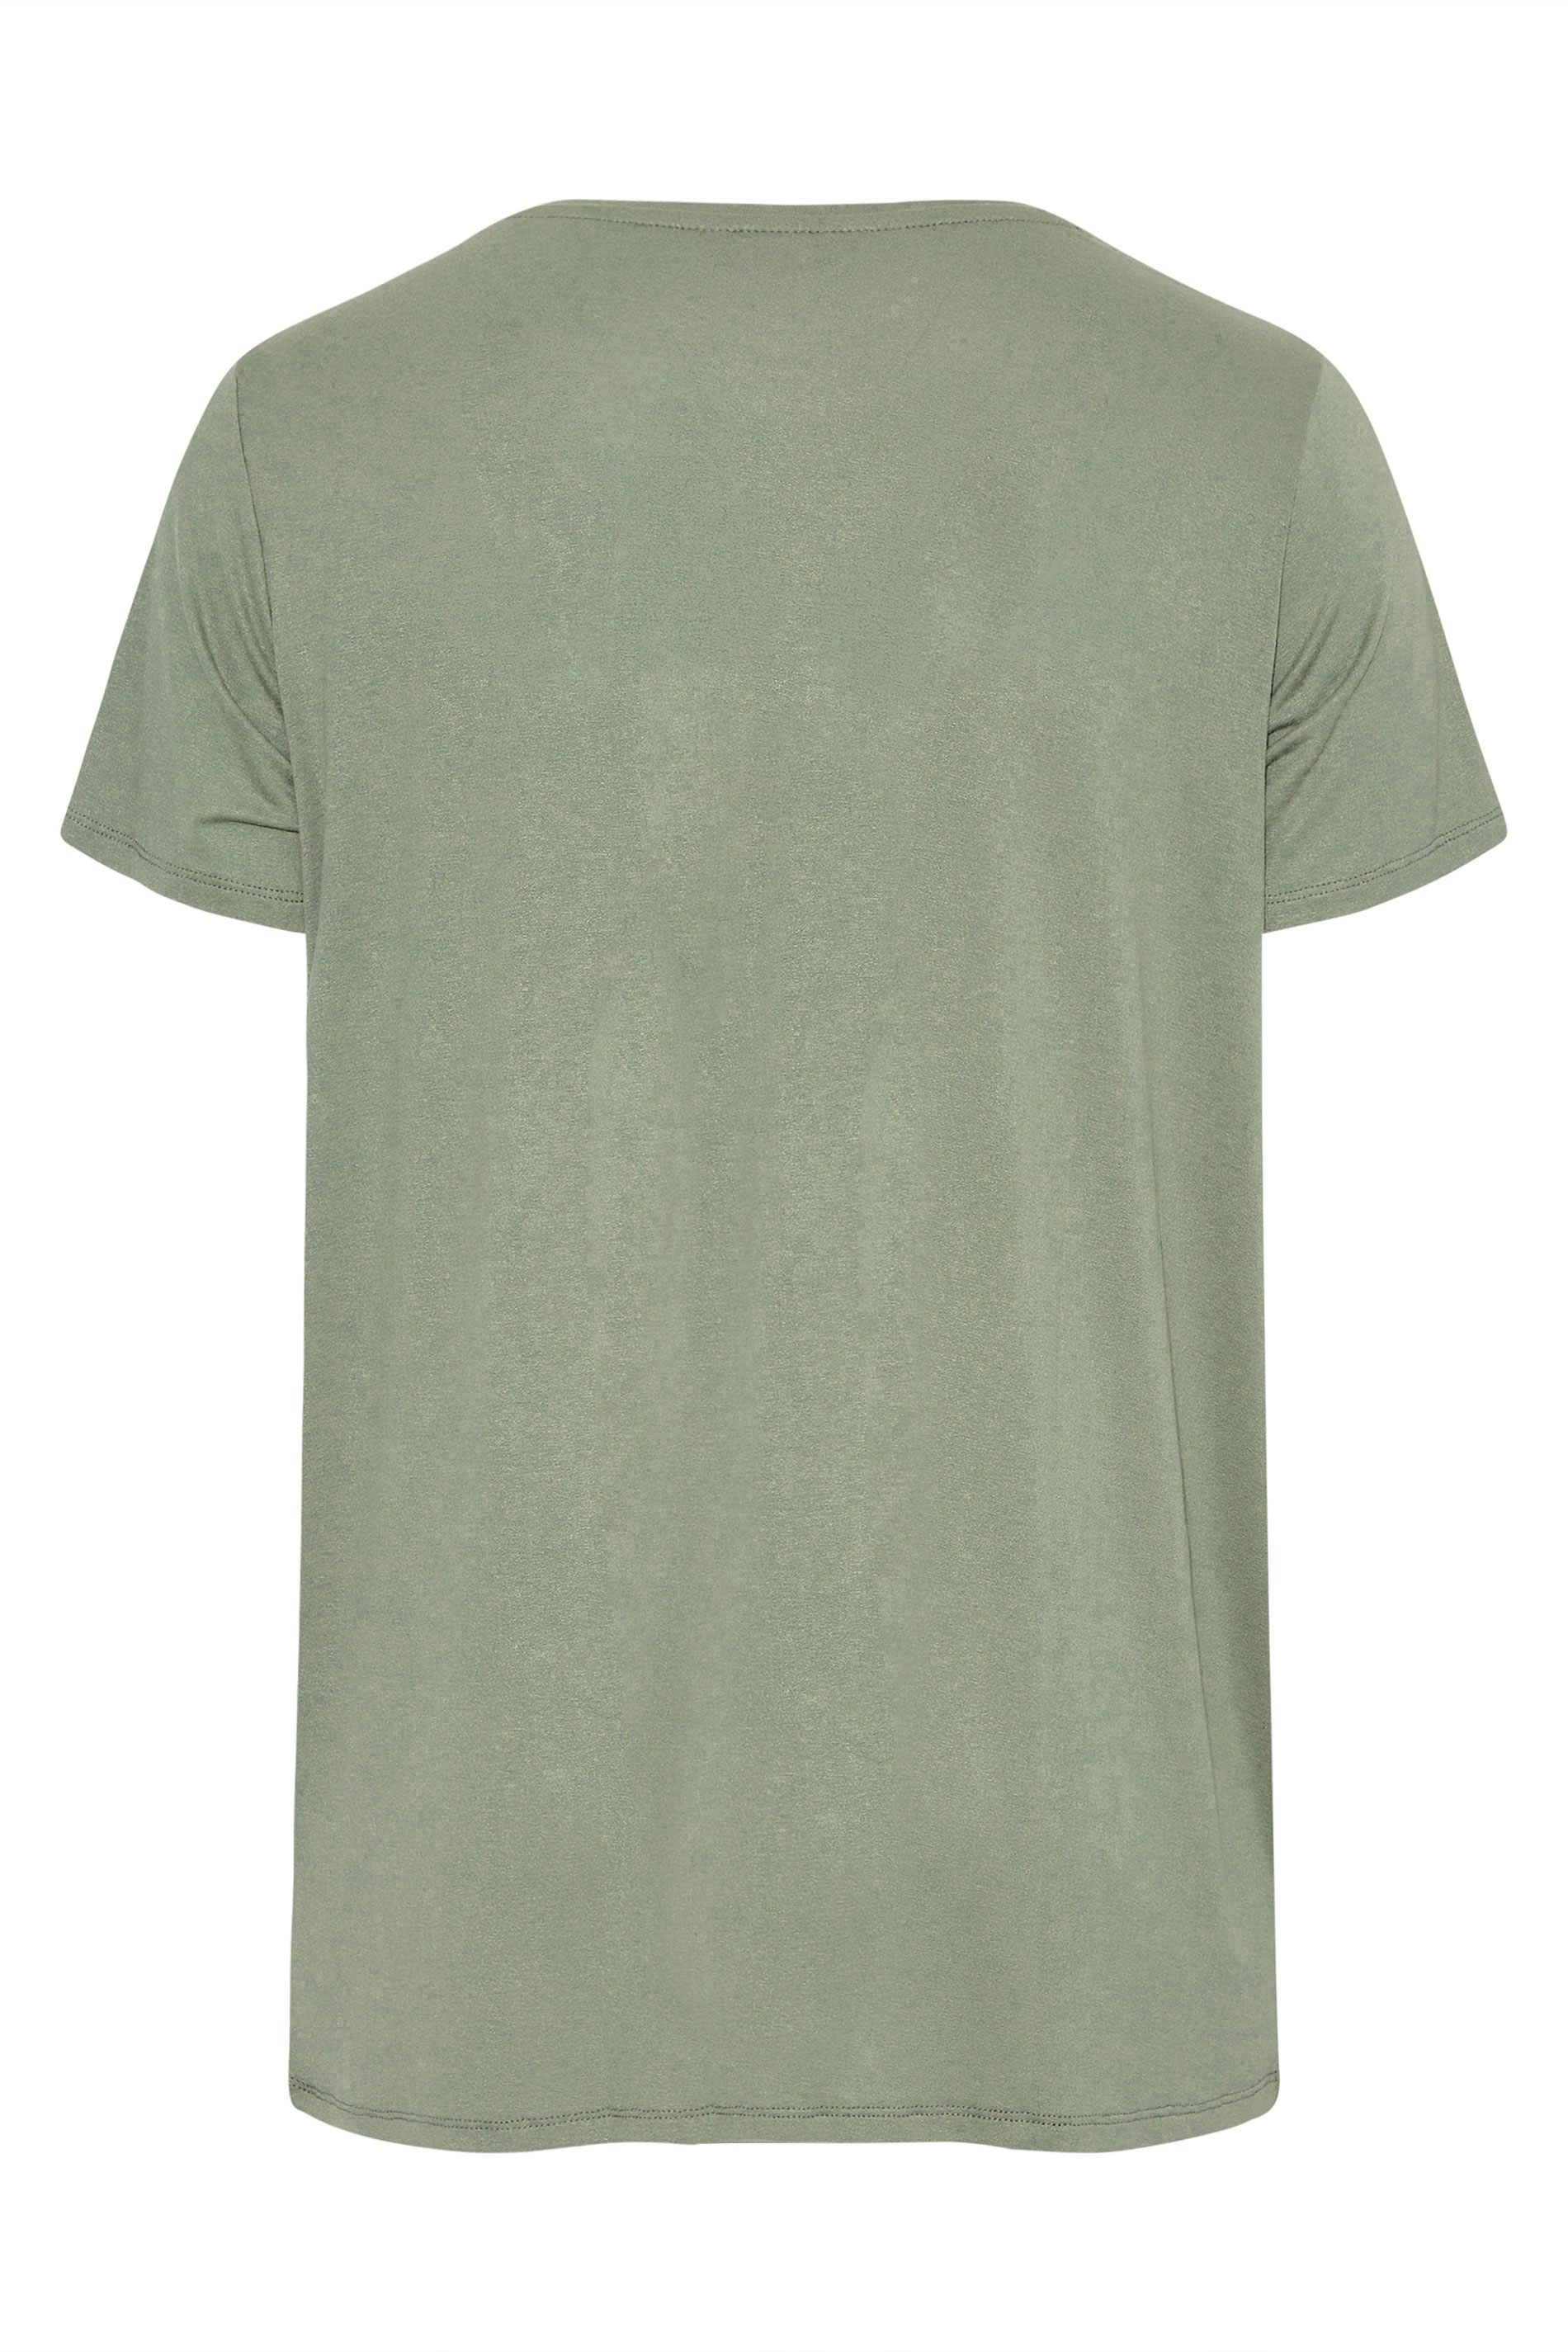 Grande taille  Tops Grande taille  T-Shirts | T-Shirt Vert Kaki Tigre Slogan 'Savage' - DK70983